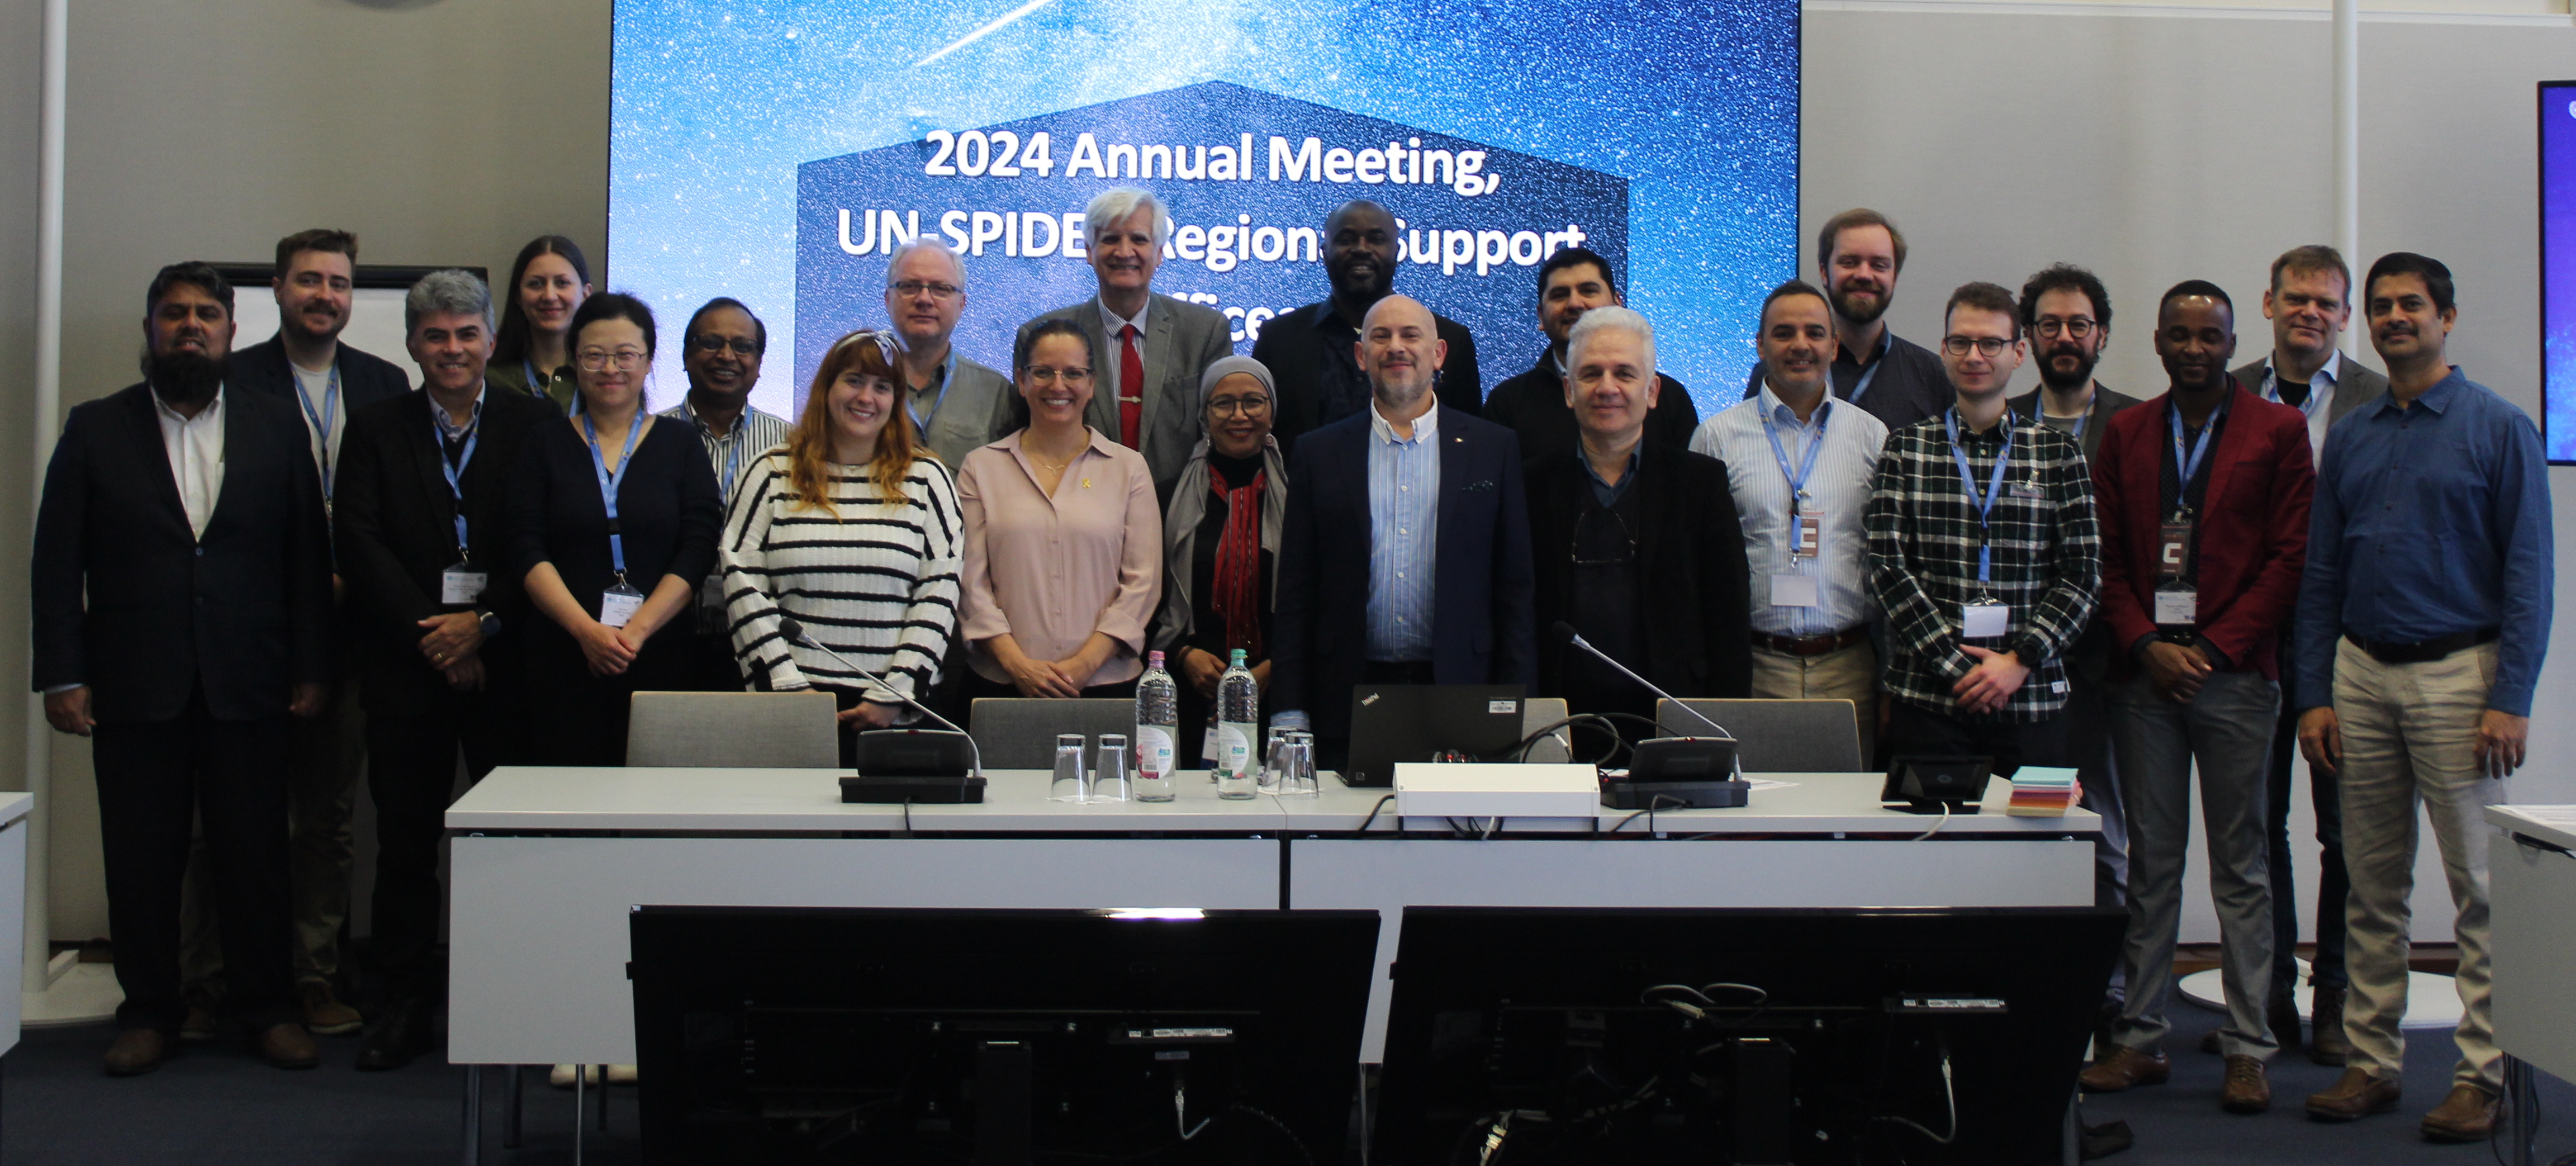 UN-SPIDER Regional Support Offices Meeting 2024